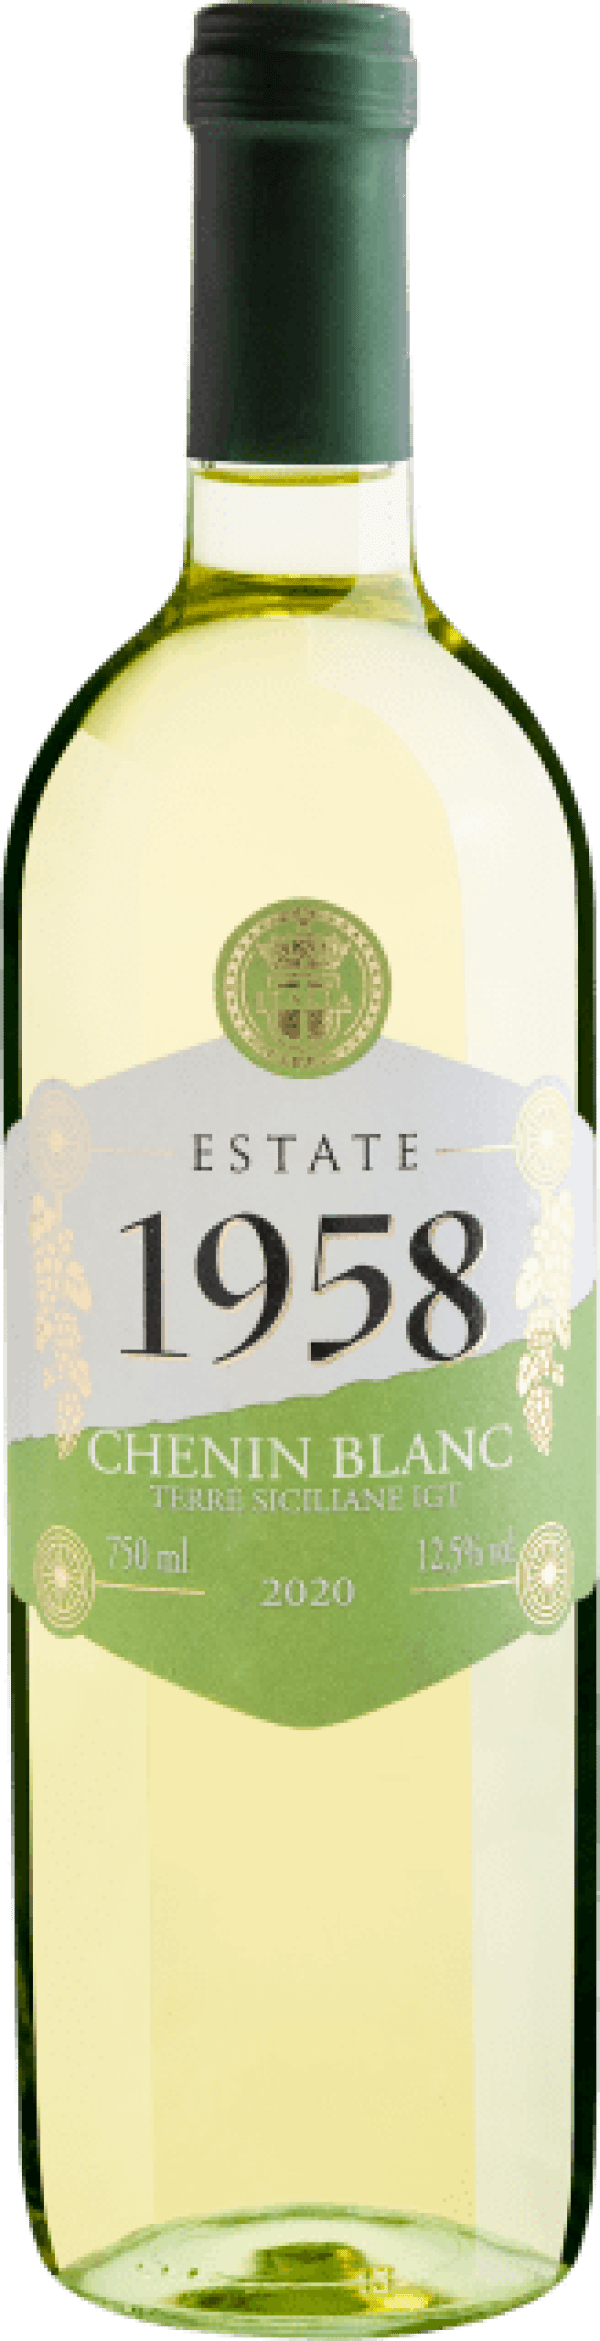 Estate 1958 Chenin Blanc Terre Siciliane IGT 2020